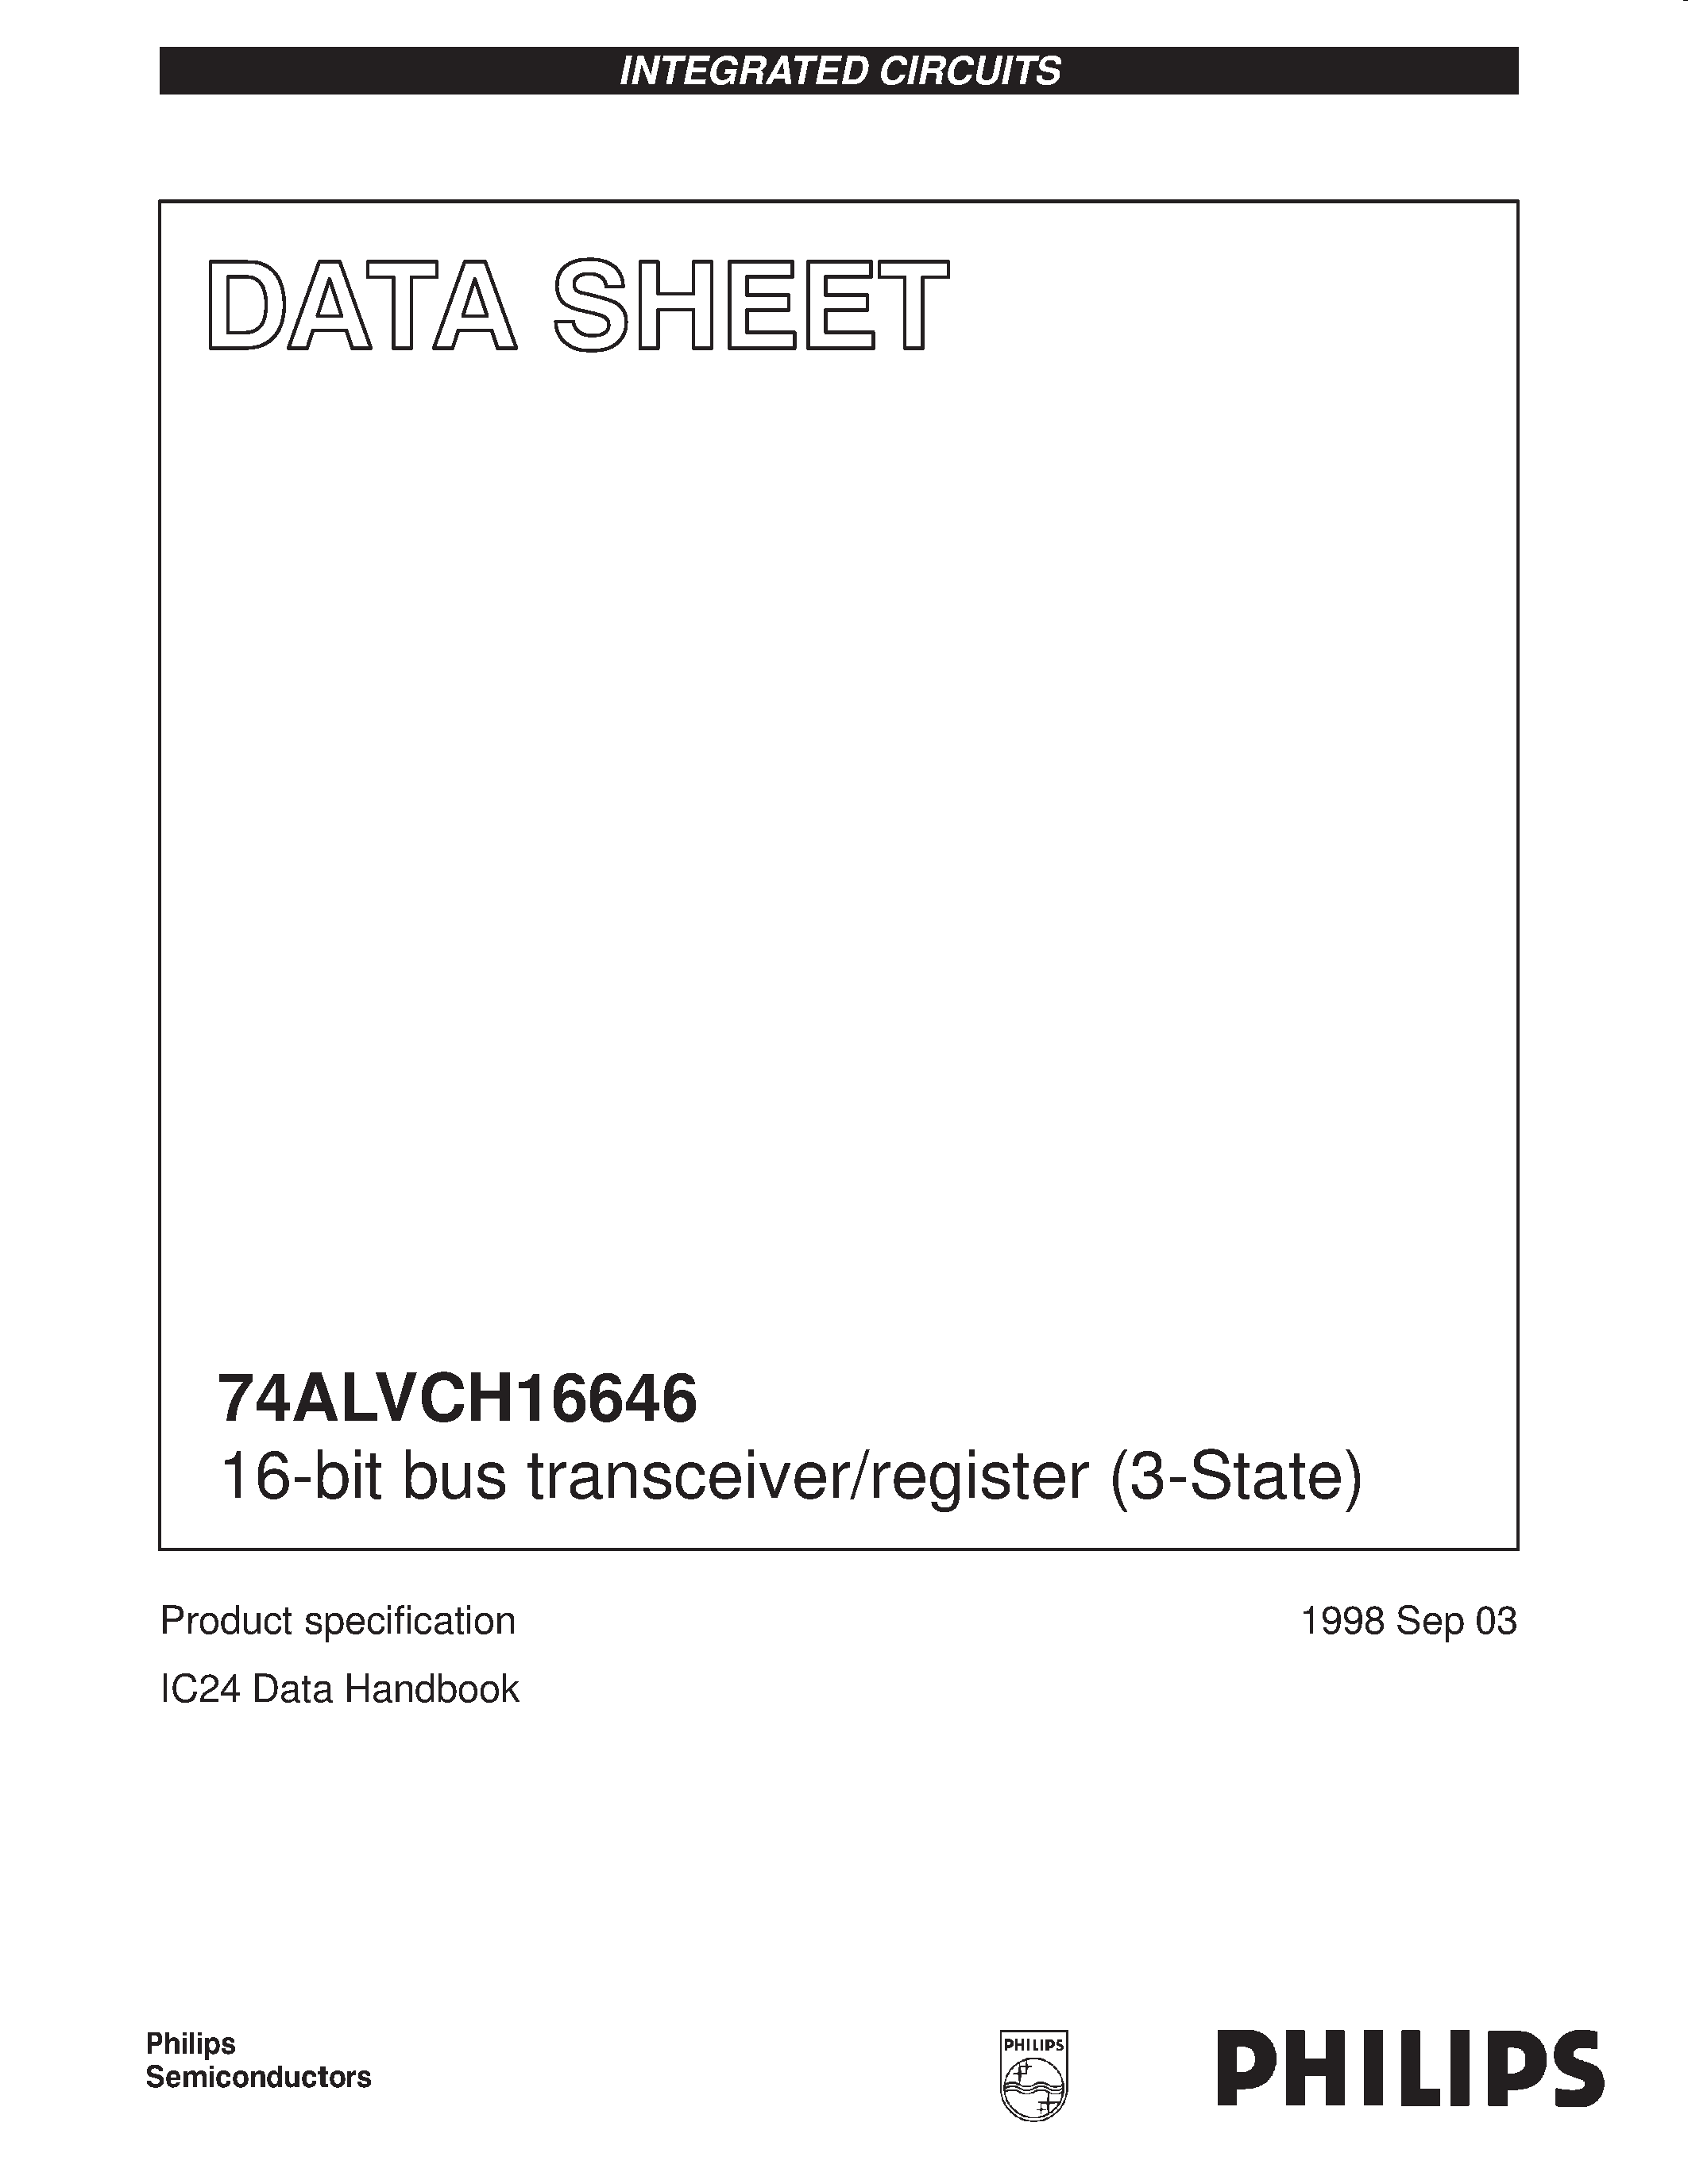 Даташит 74ALVCH16646 - 16-bit bus transceiver/register 3-State страница 1